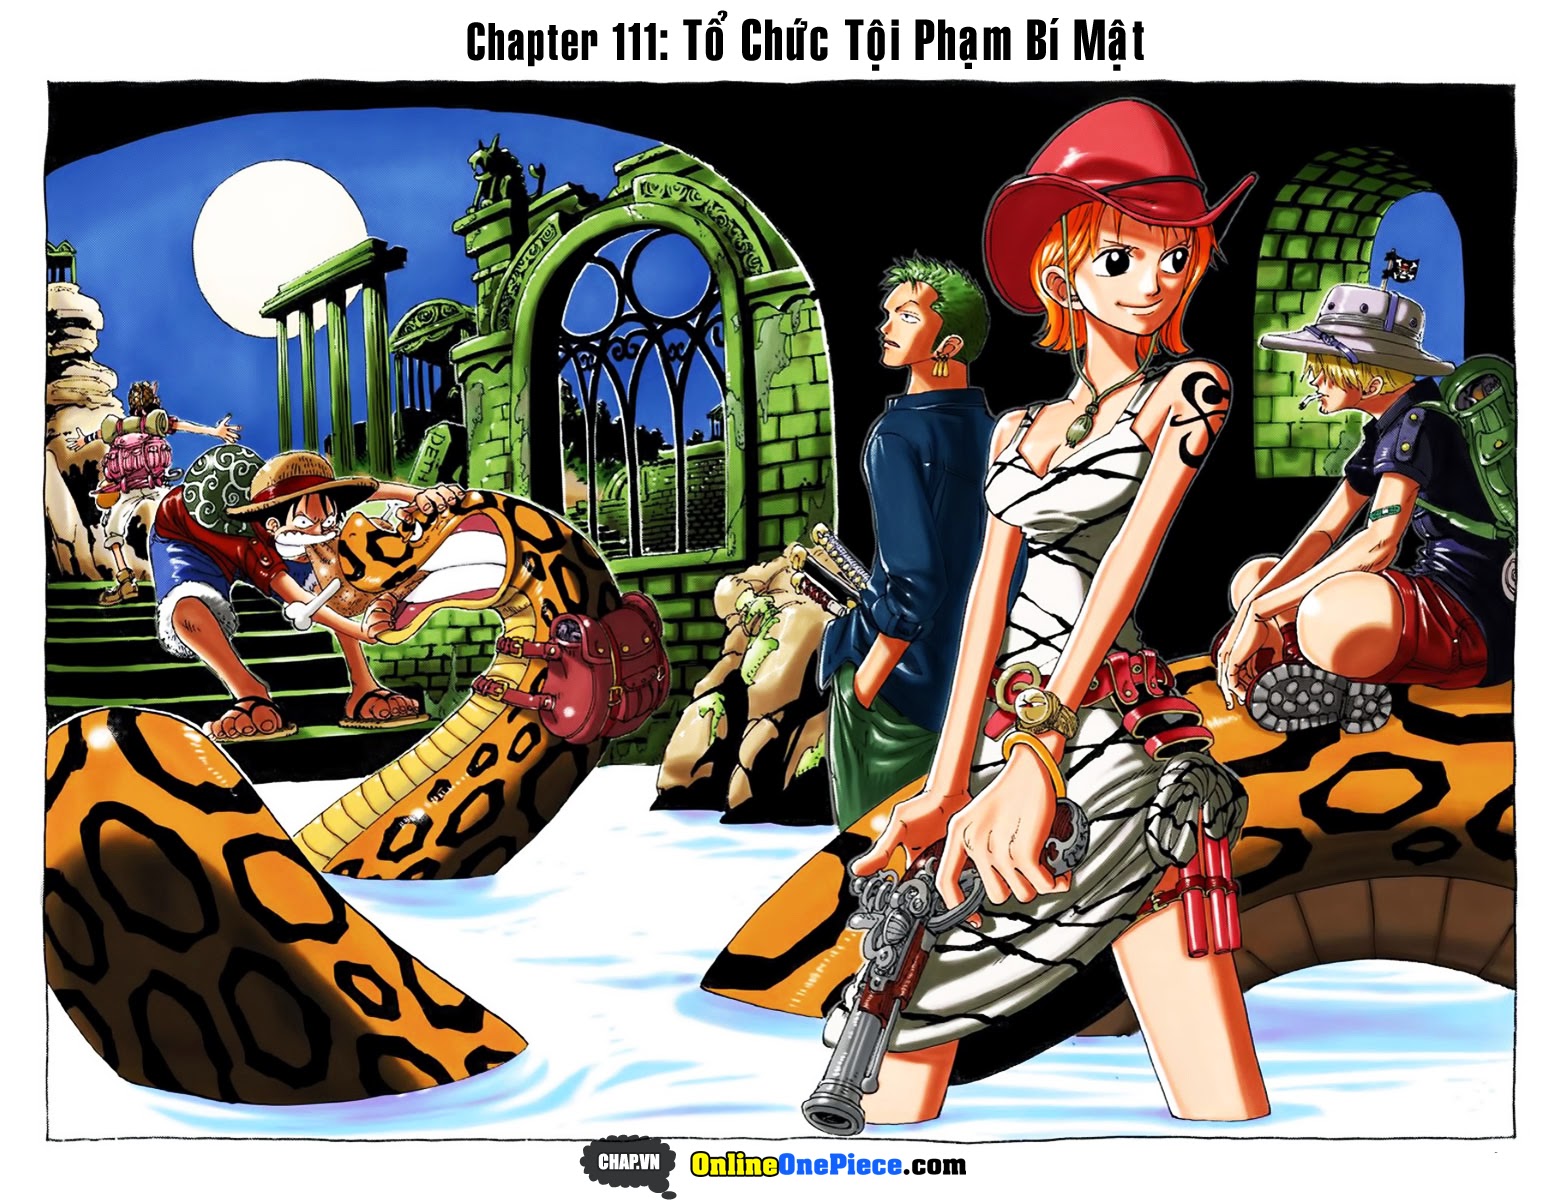 One Piece - Digital Colored Comics